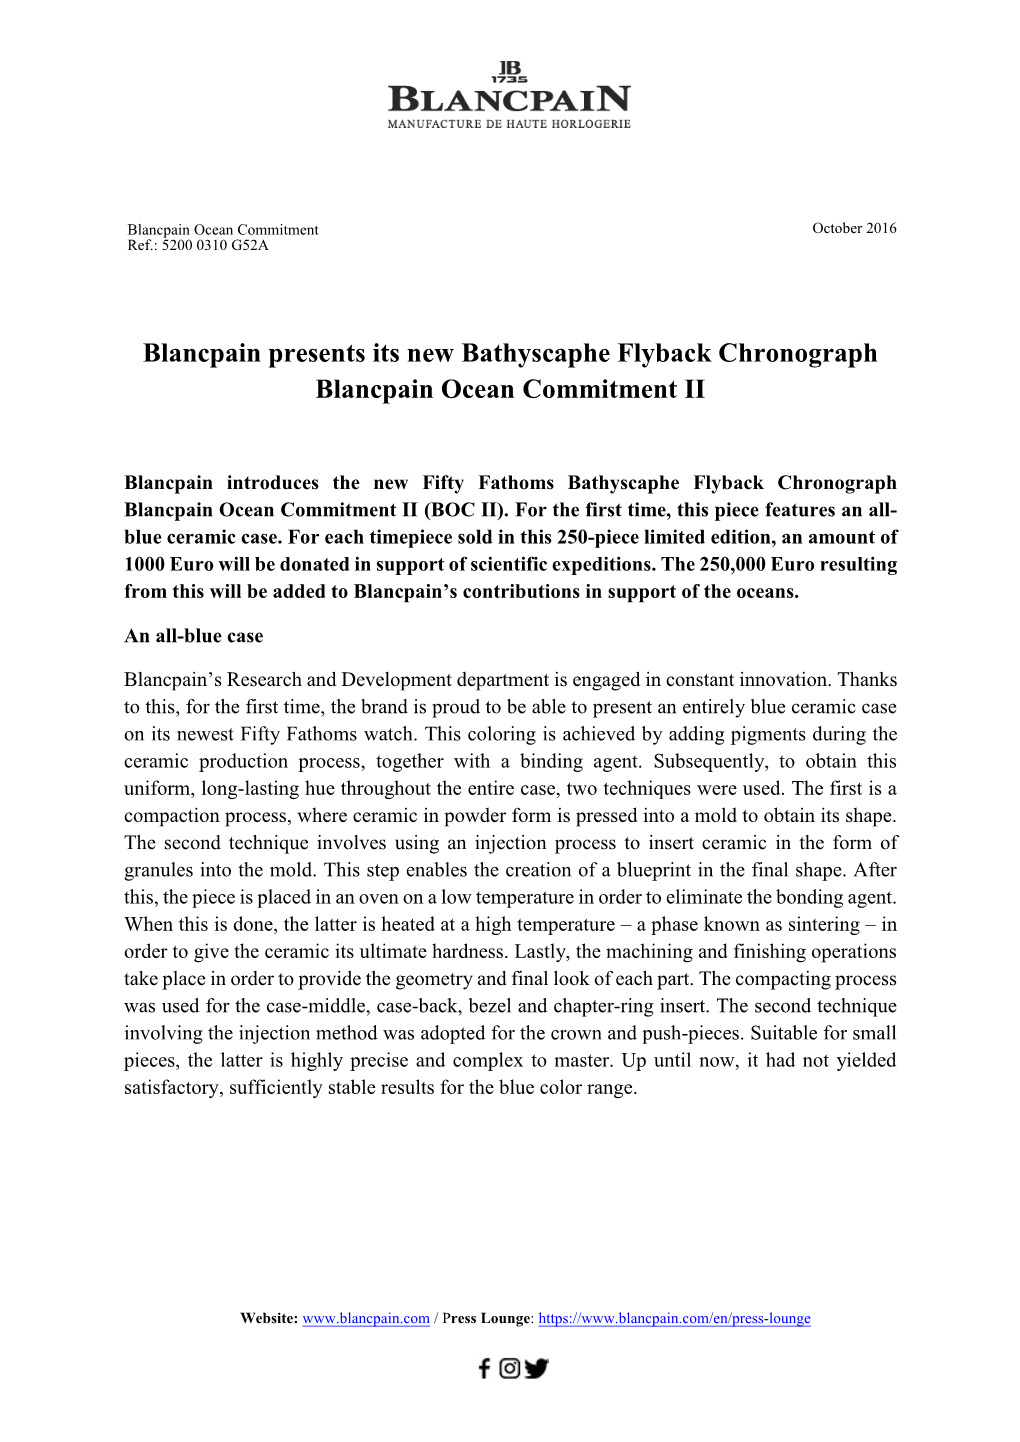 Blancpain Presents Its New Bathyscaphe Flyback Chronograph Blancpain Ocean Commitment II